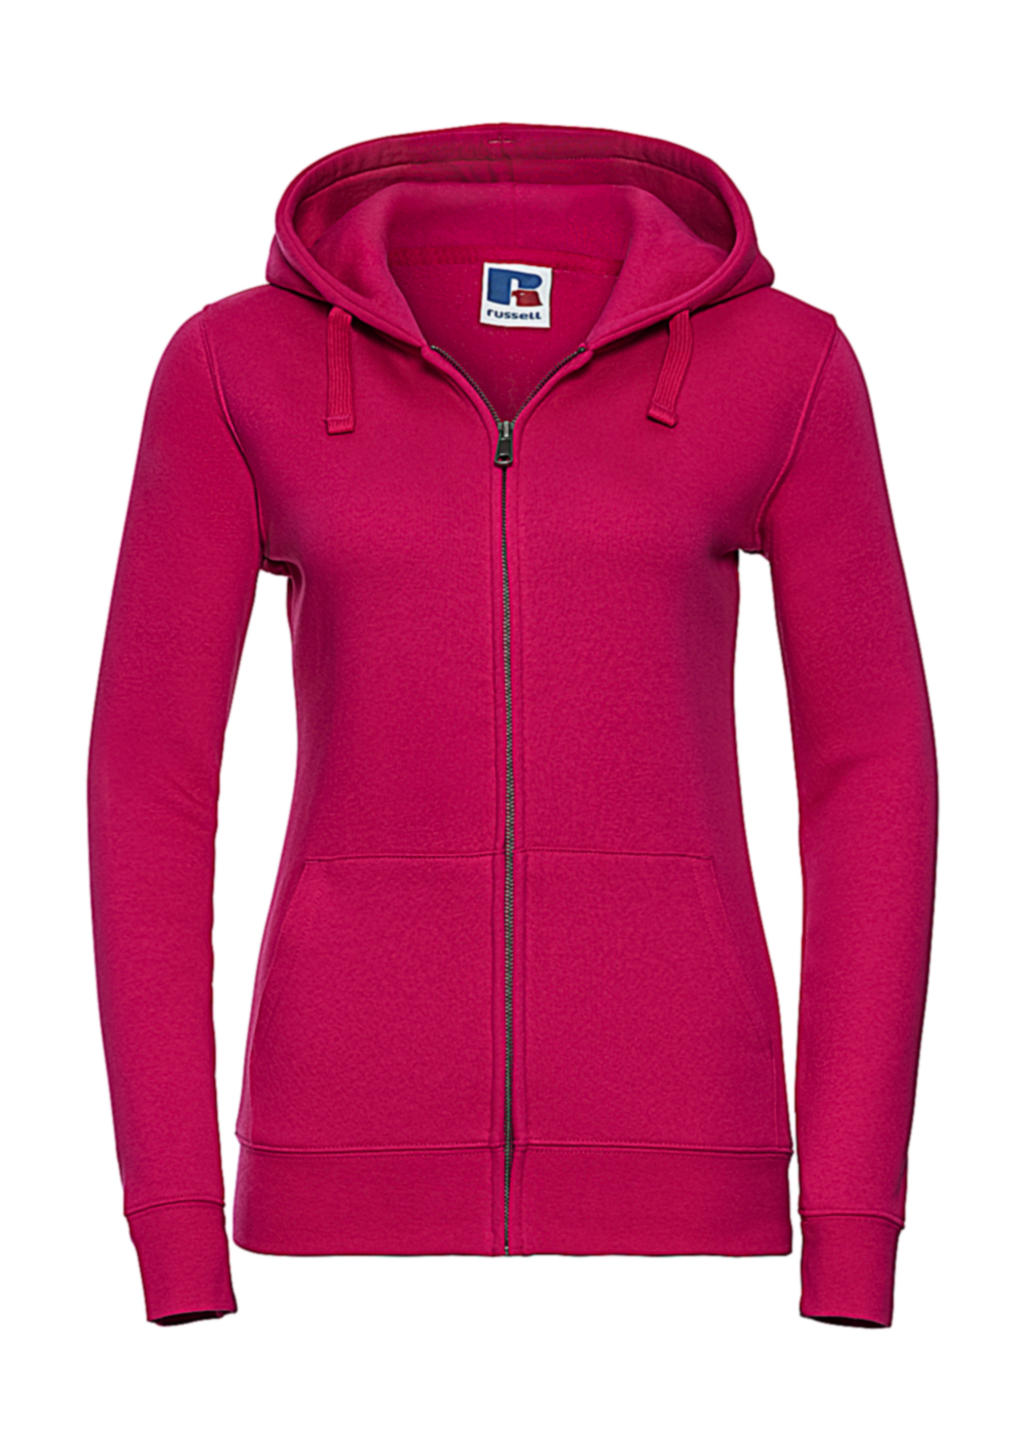  Ladies Authentic Zipped Hood in Farbe Fuchsia